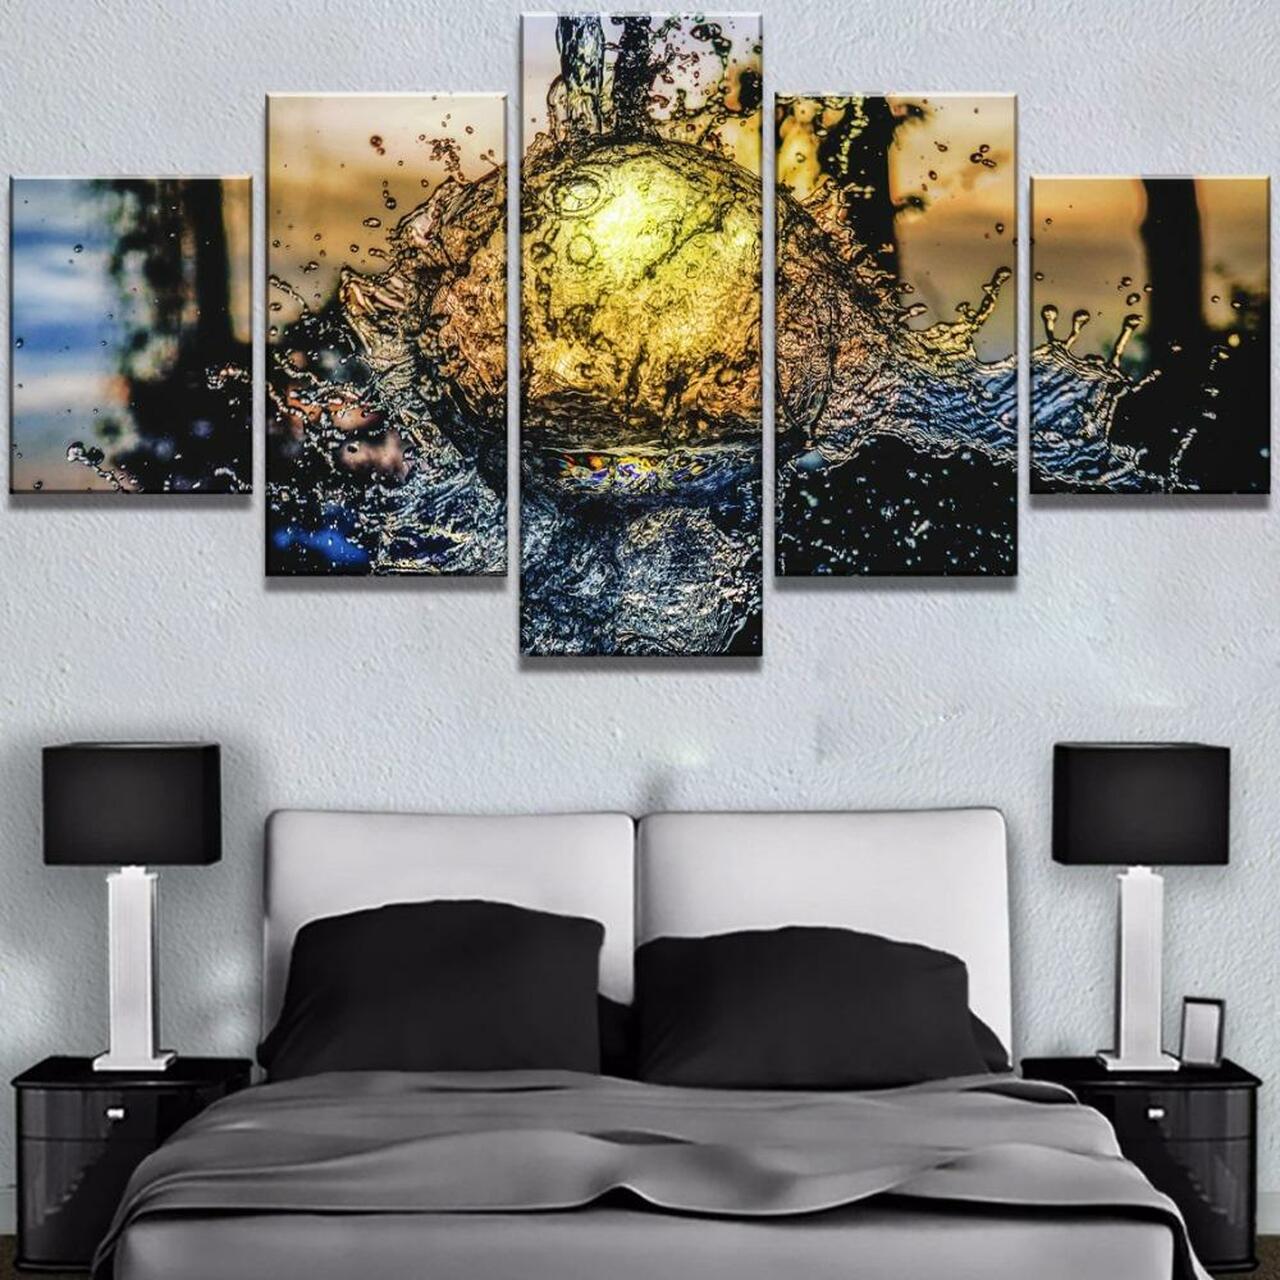 WATER BALL SUNRISE 5 Piece Canvas Art Wall Decor